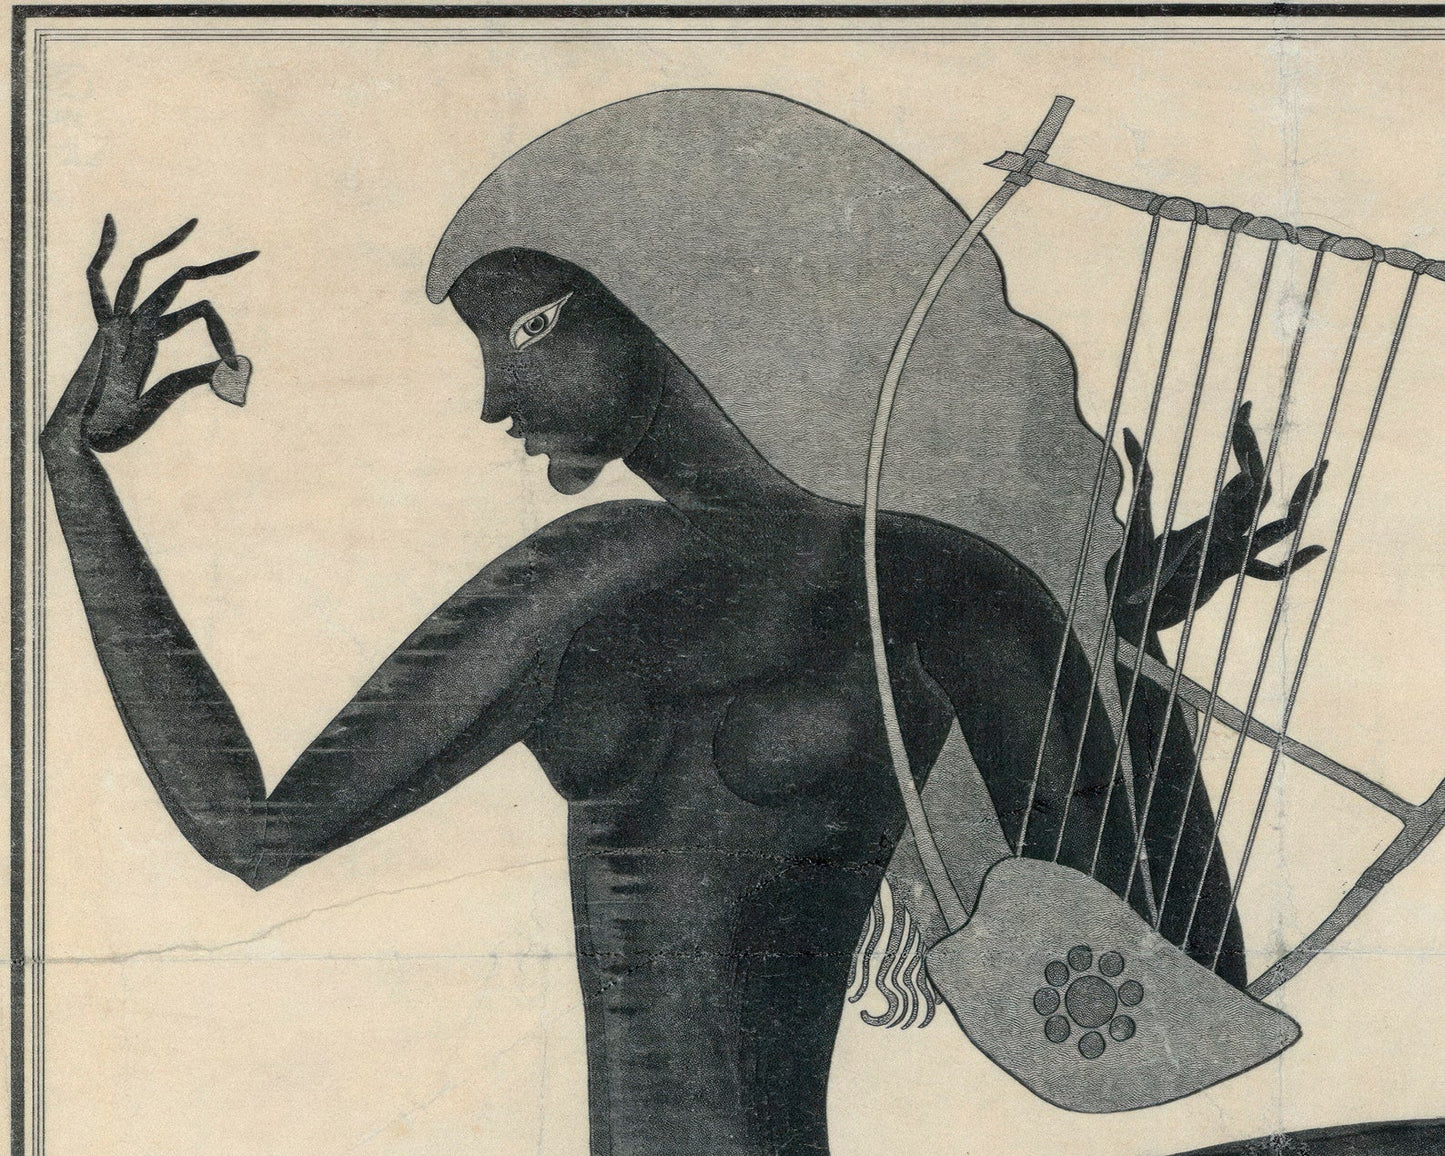 Edmund Dulac "Salzburg Mozarteum - Concert Festival 1924" Vintage Advertising Poster - Mabon Gallery